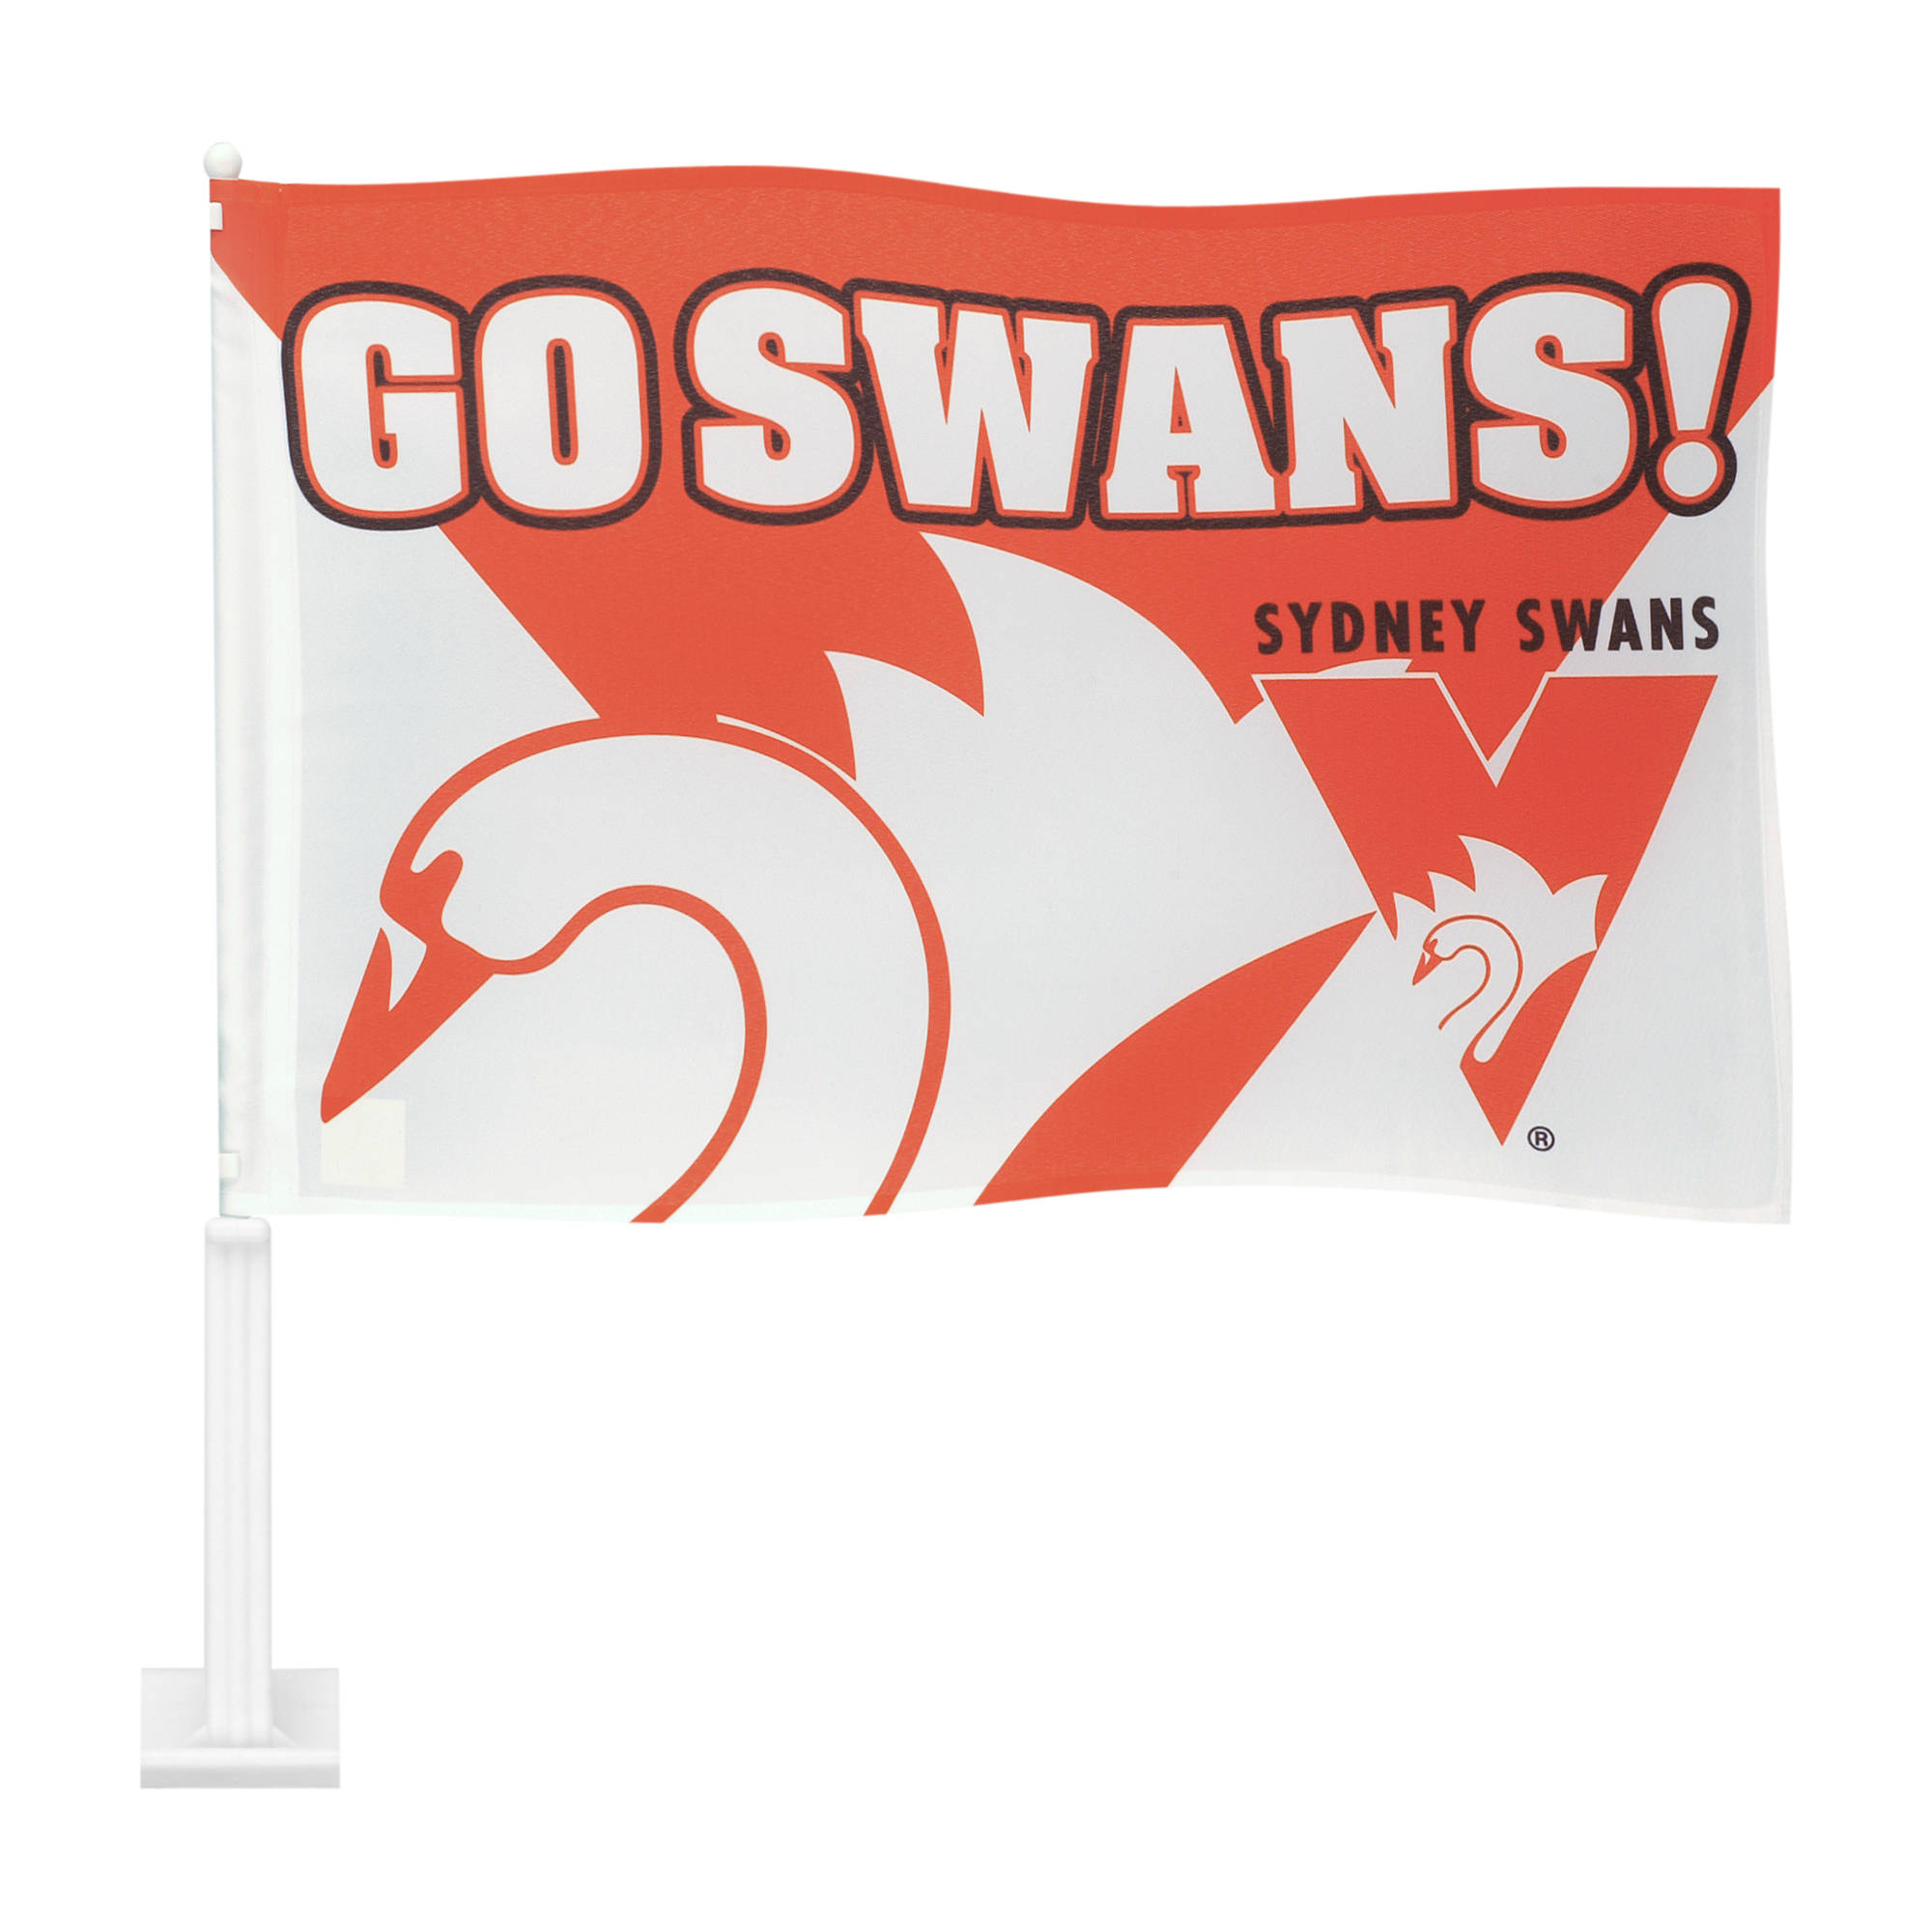 Sydney Swans #5